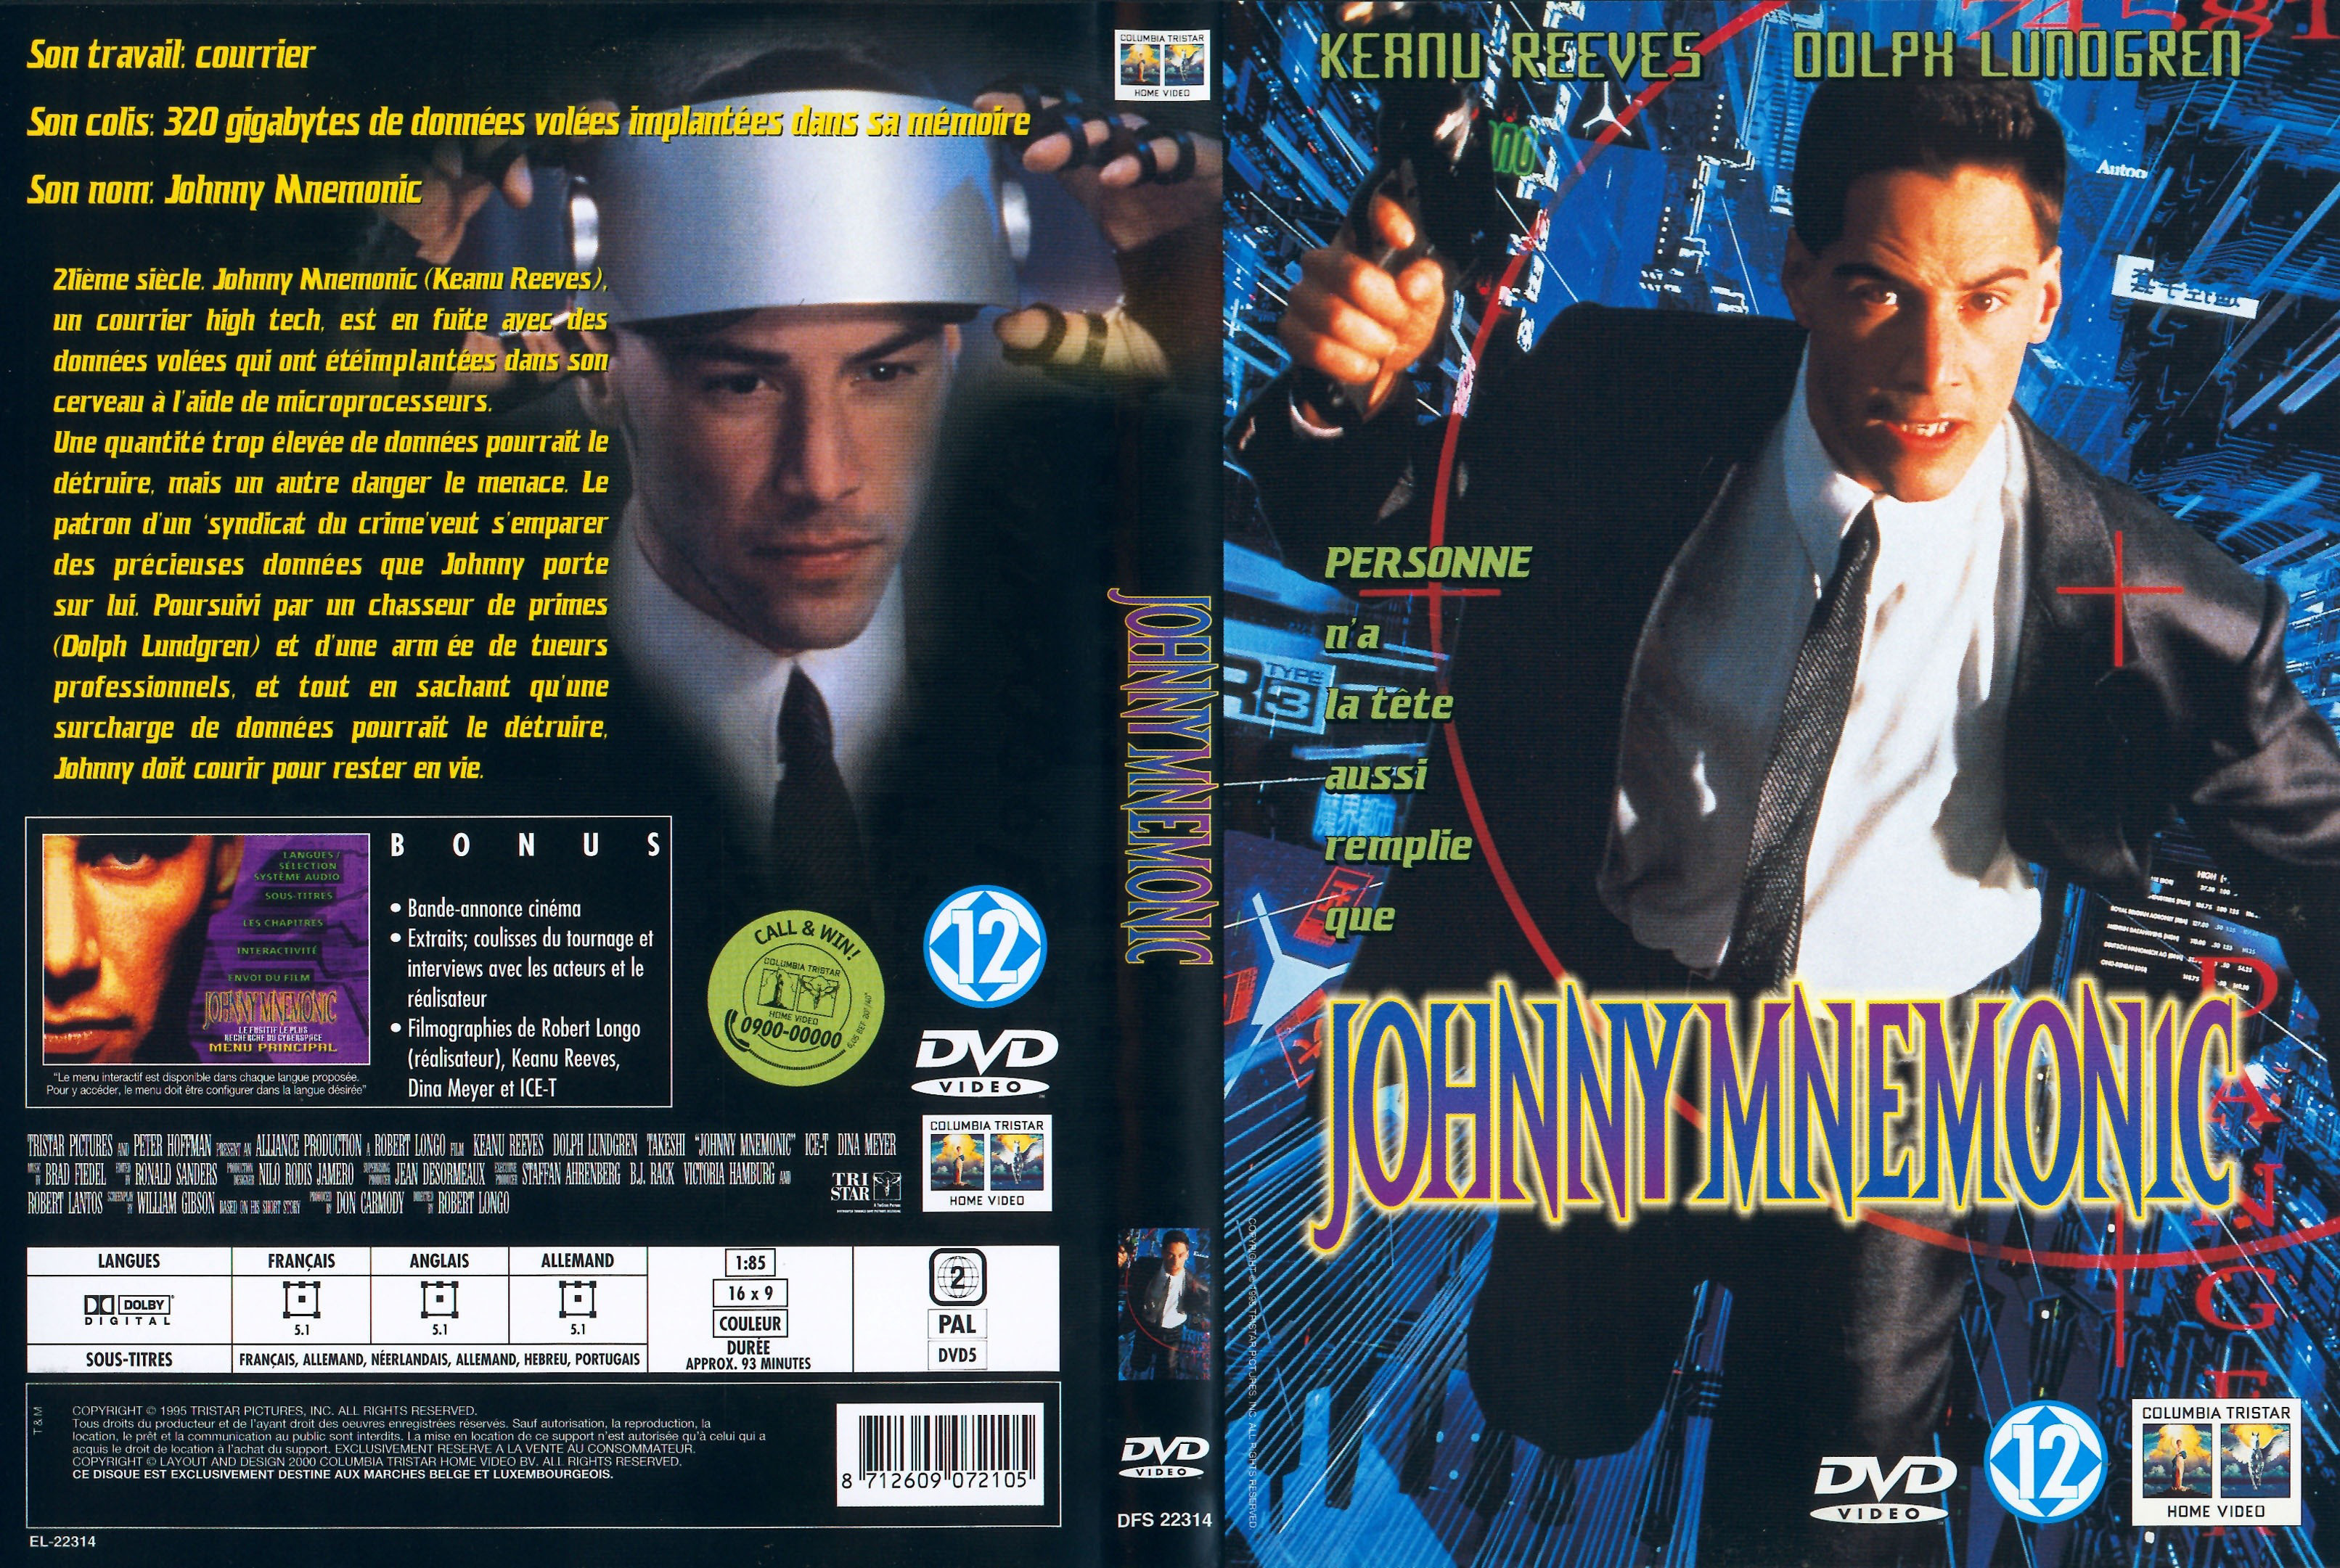 Jaquette DVD Johnny Mnemonic v2